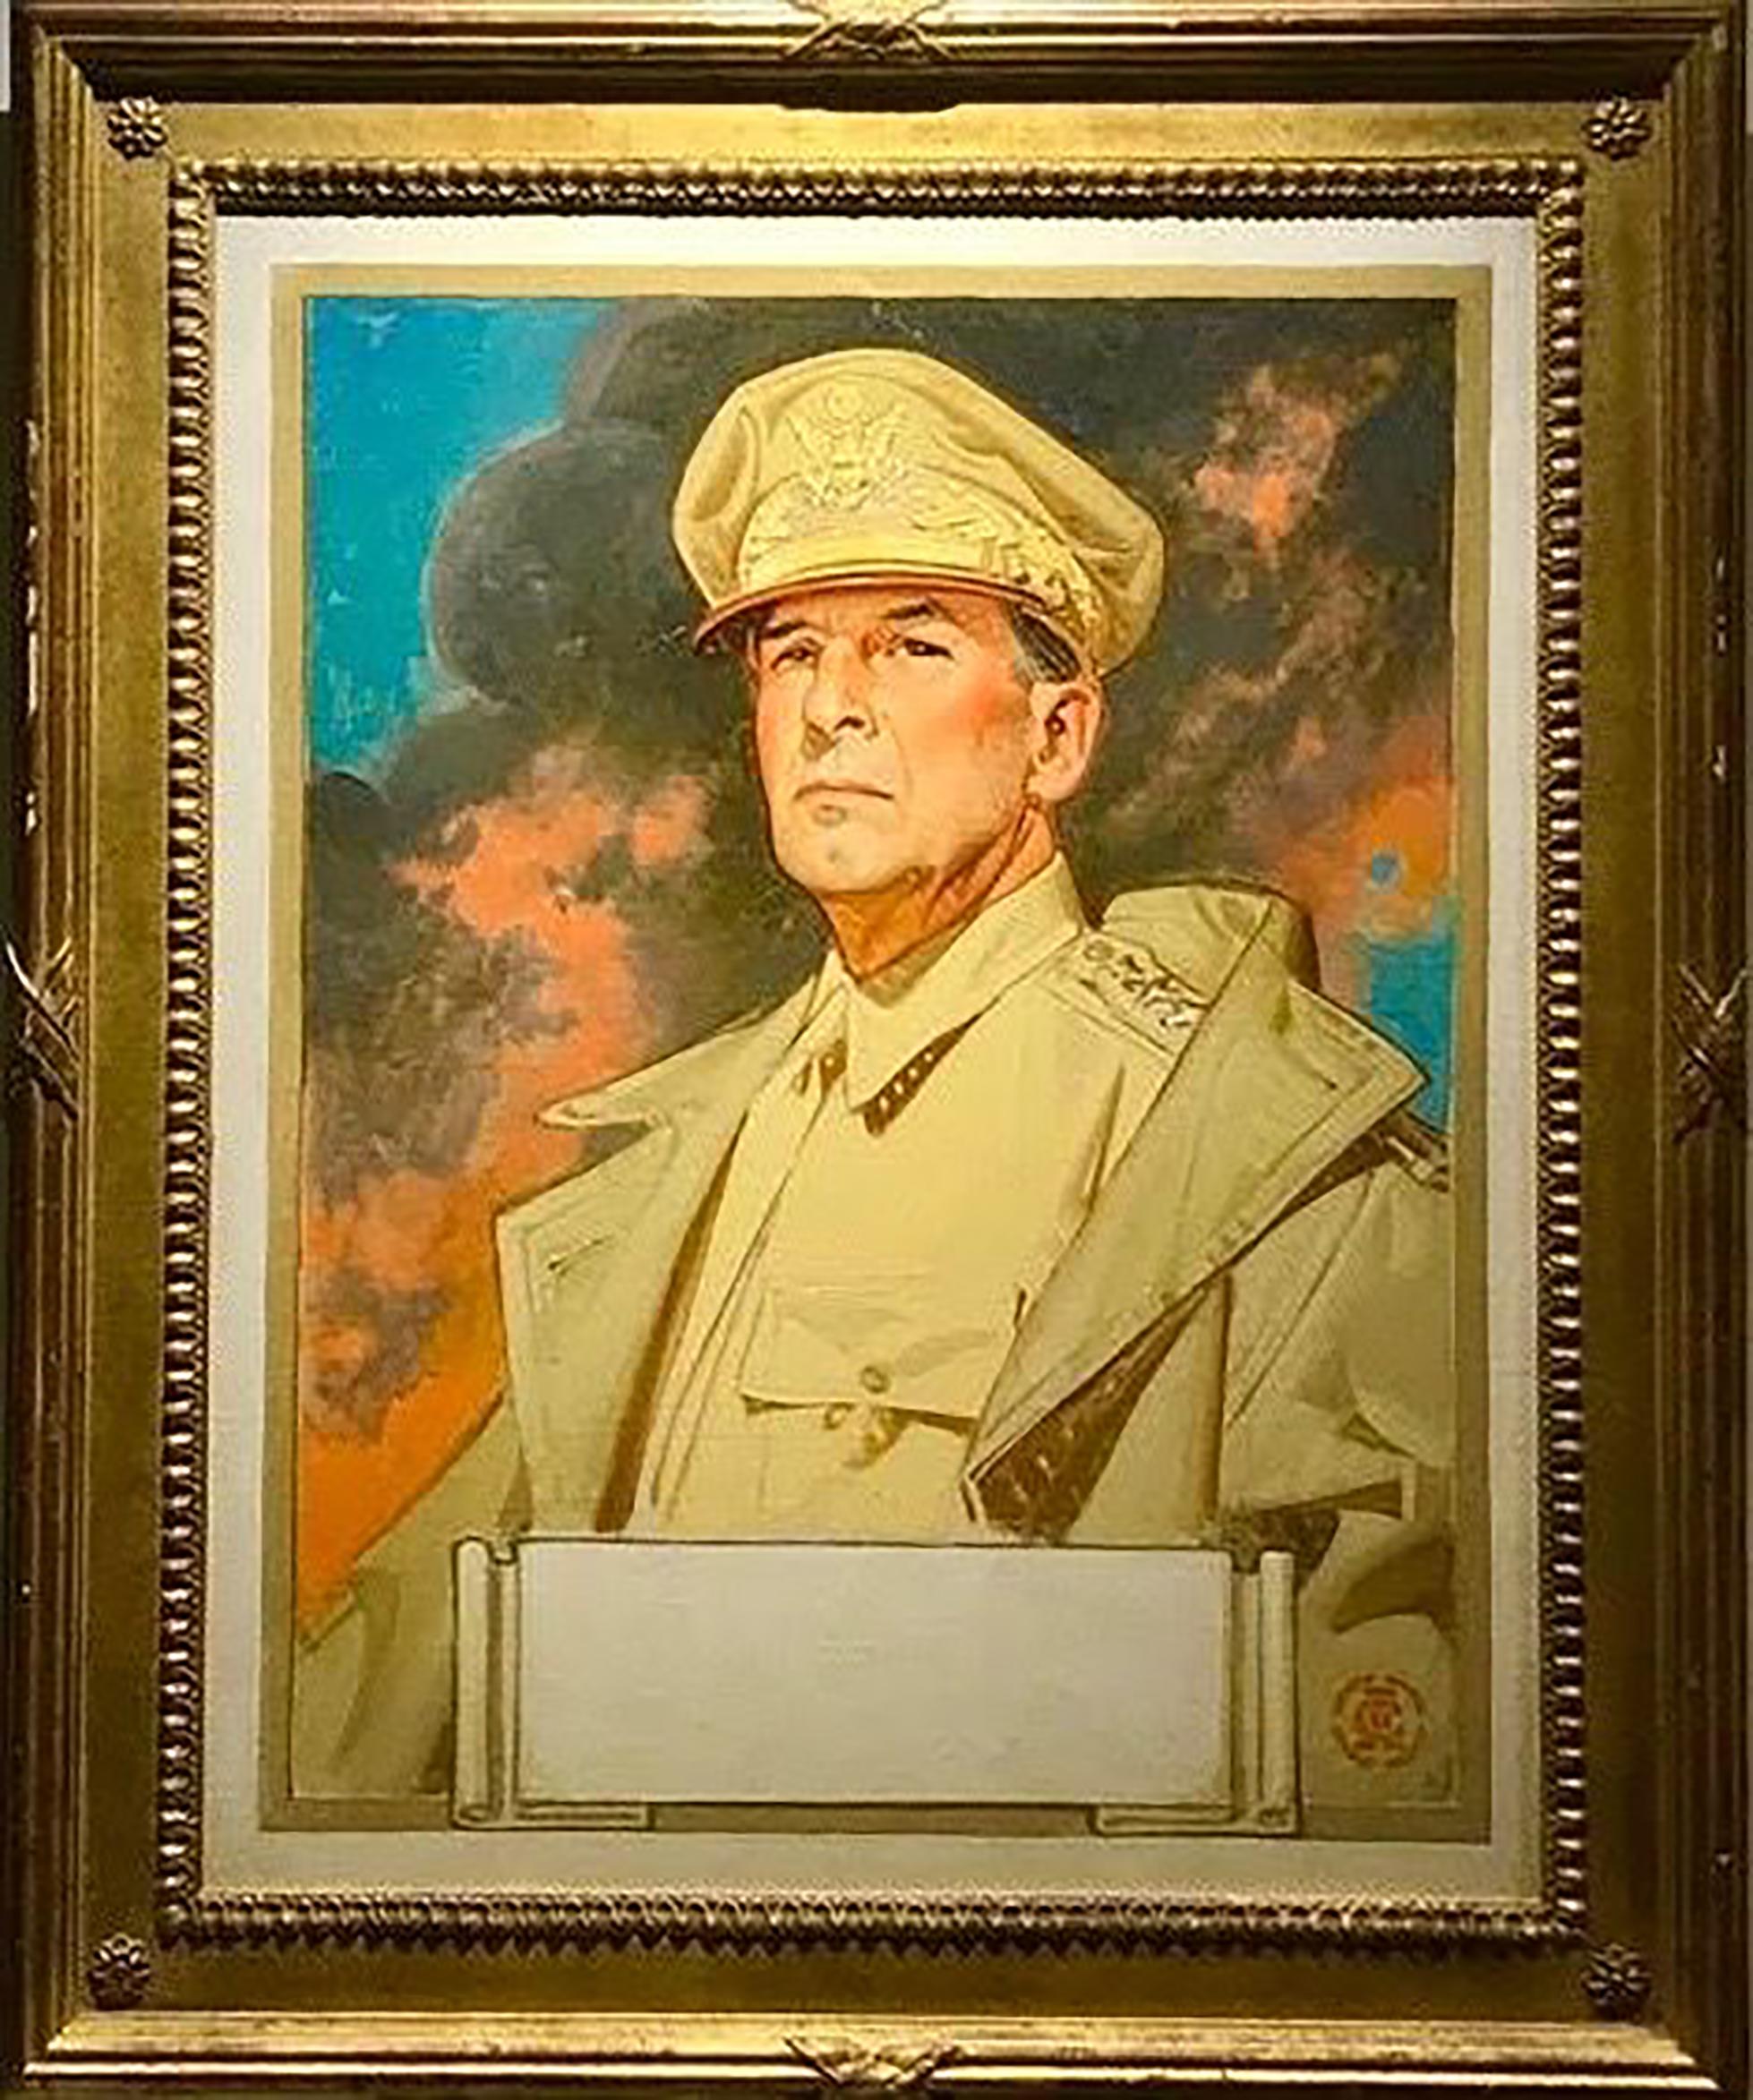 General Douglas MacArthur - Painting by Joseph Christian Leyendecker